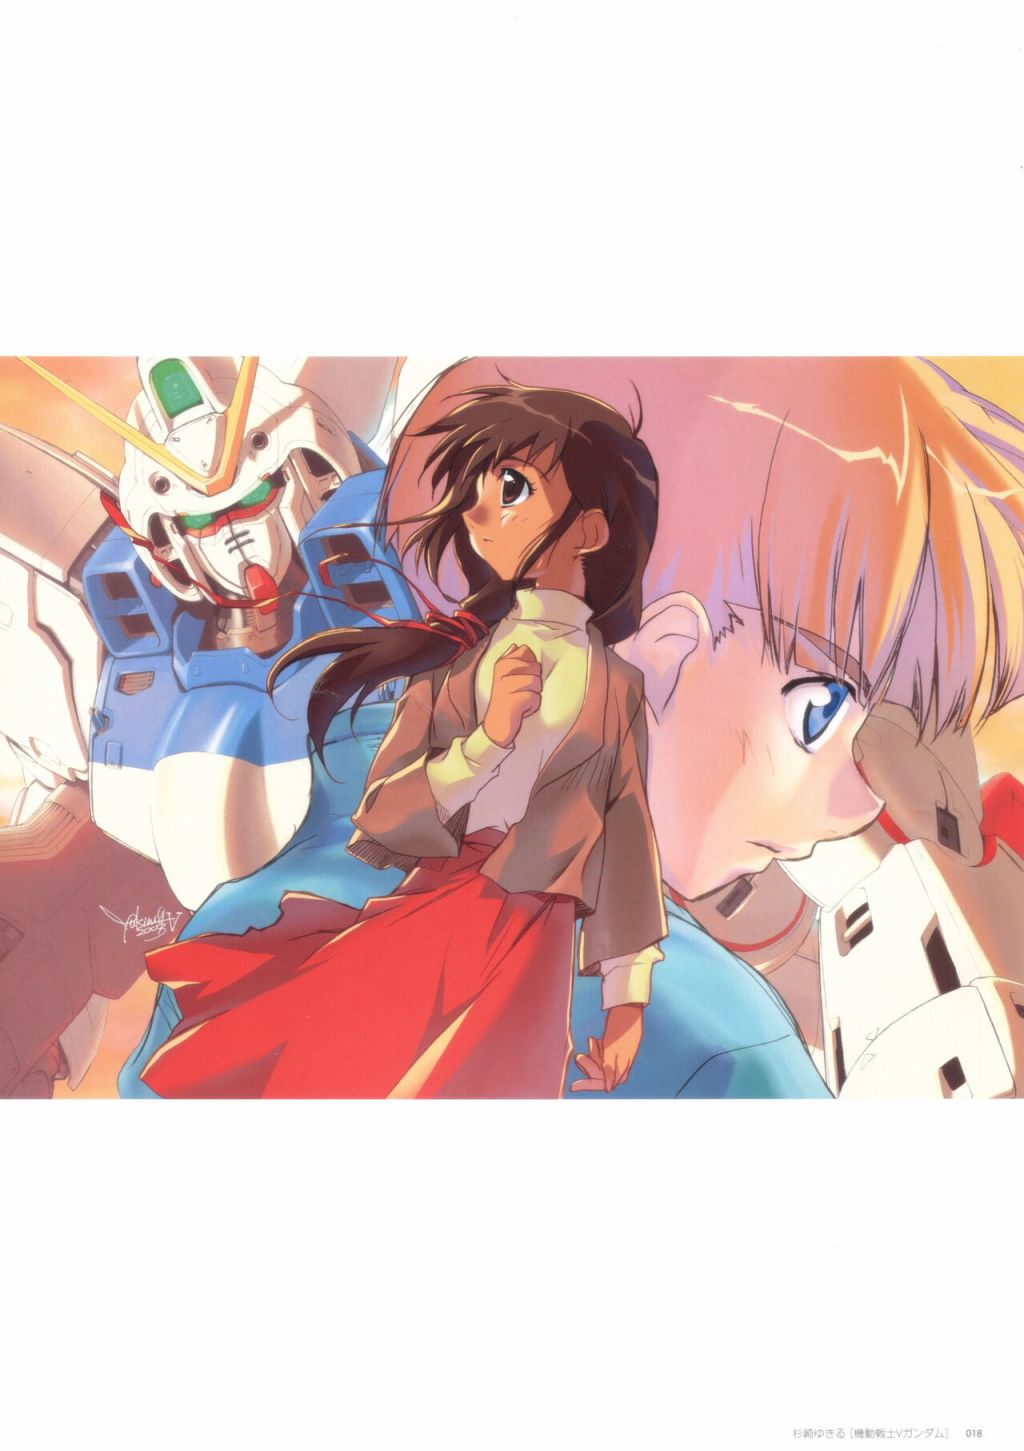 Art Collection of Gundam A - 全一冊(1/3) - 3